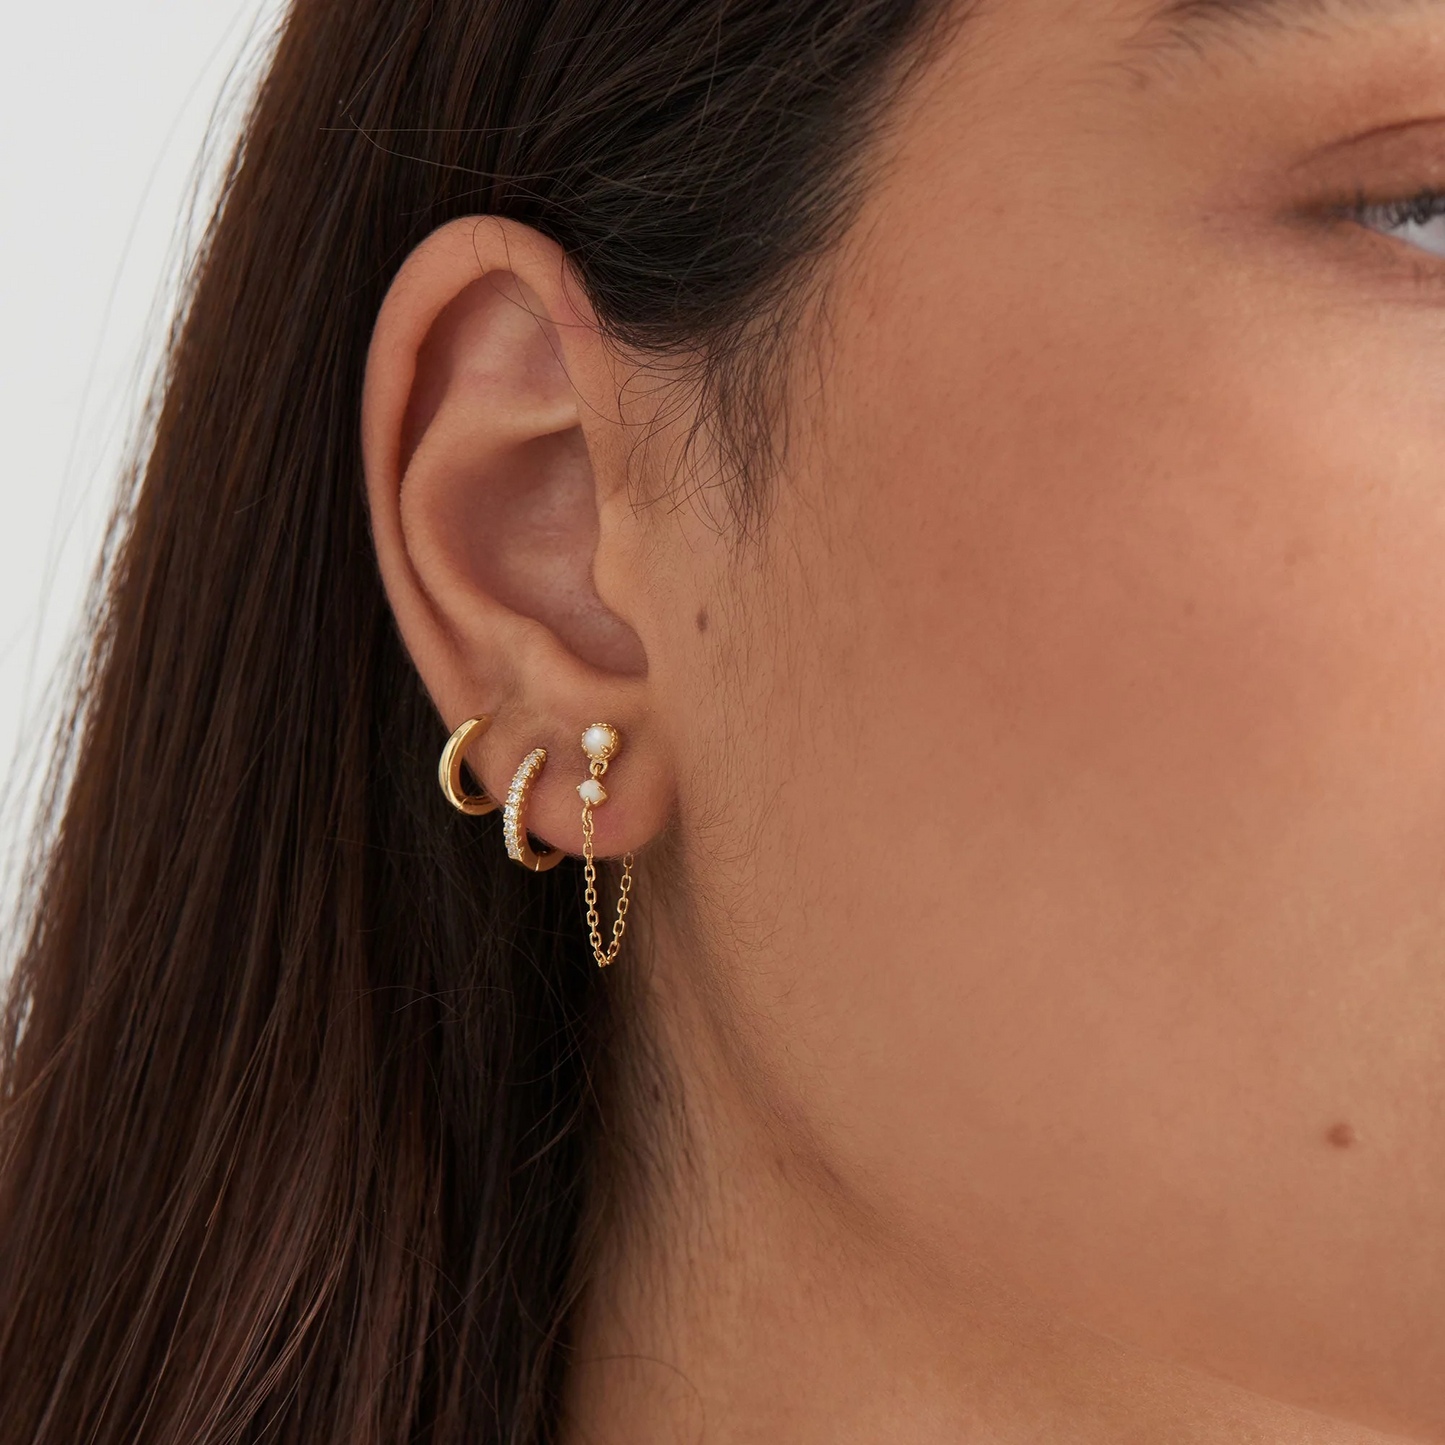 Ania Haie Gold Plated Smooth Mini Huggie Hoop Earrings E035-14G